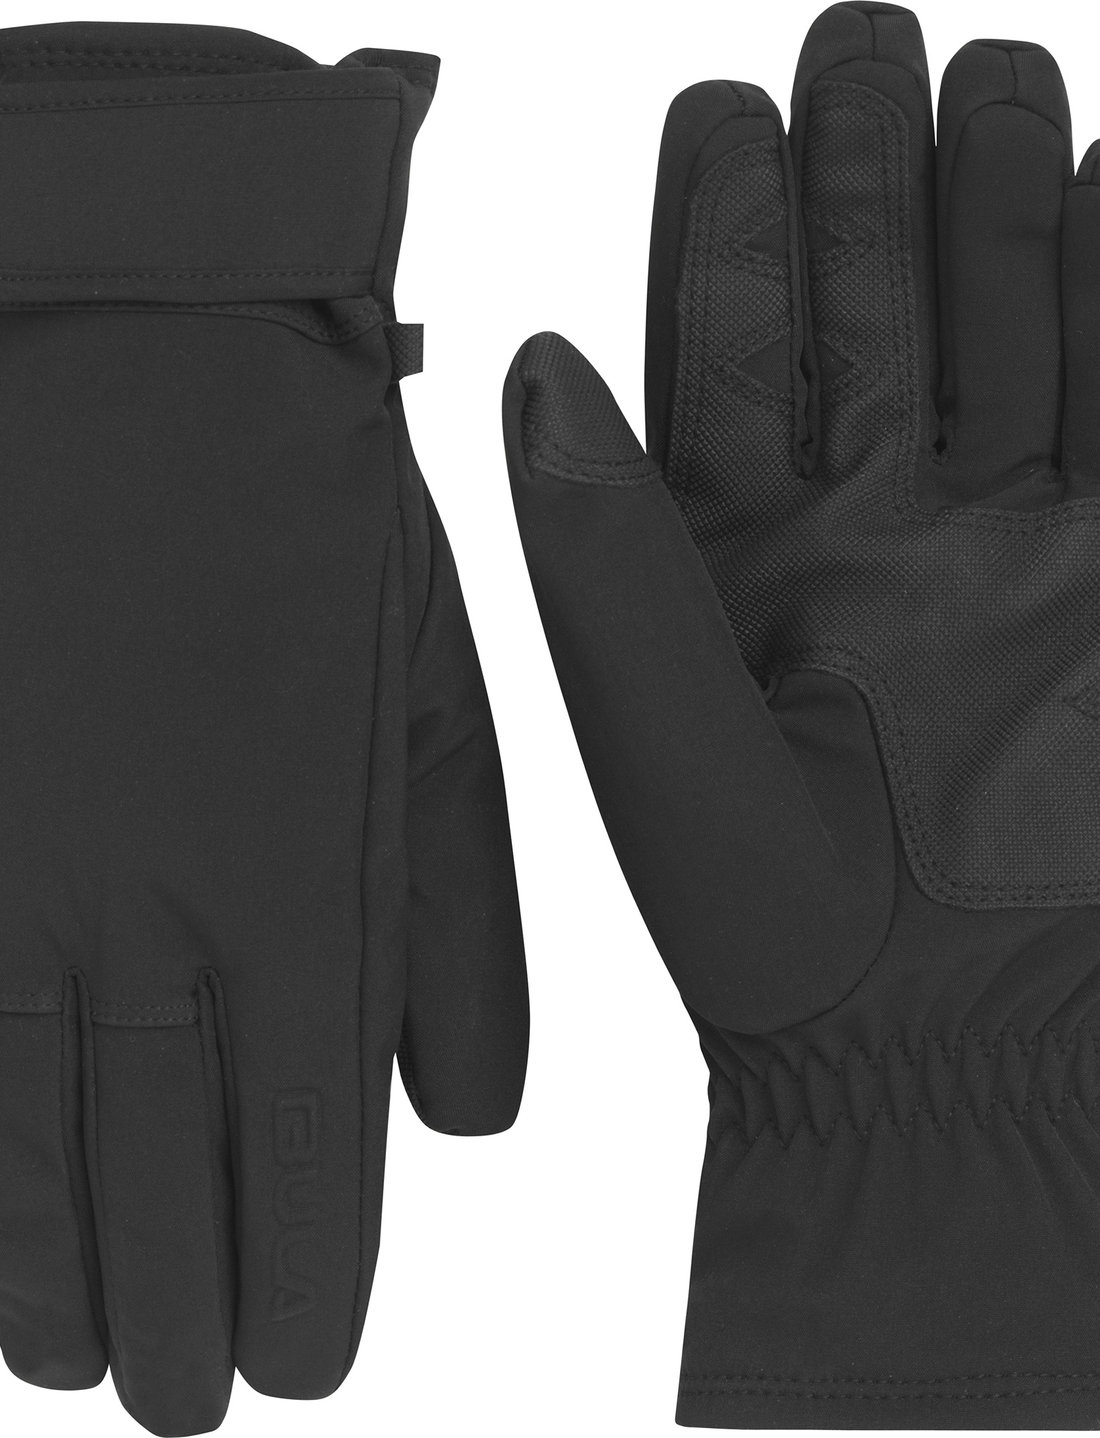 Bula Bula Classic Gloves - Gloves